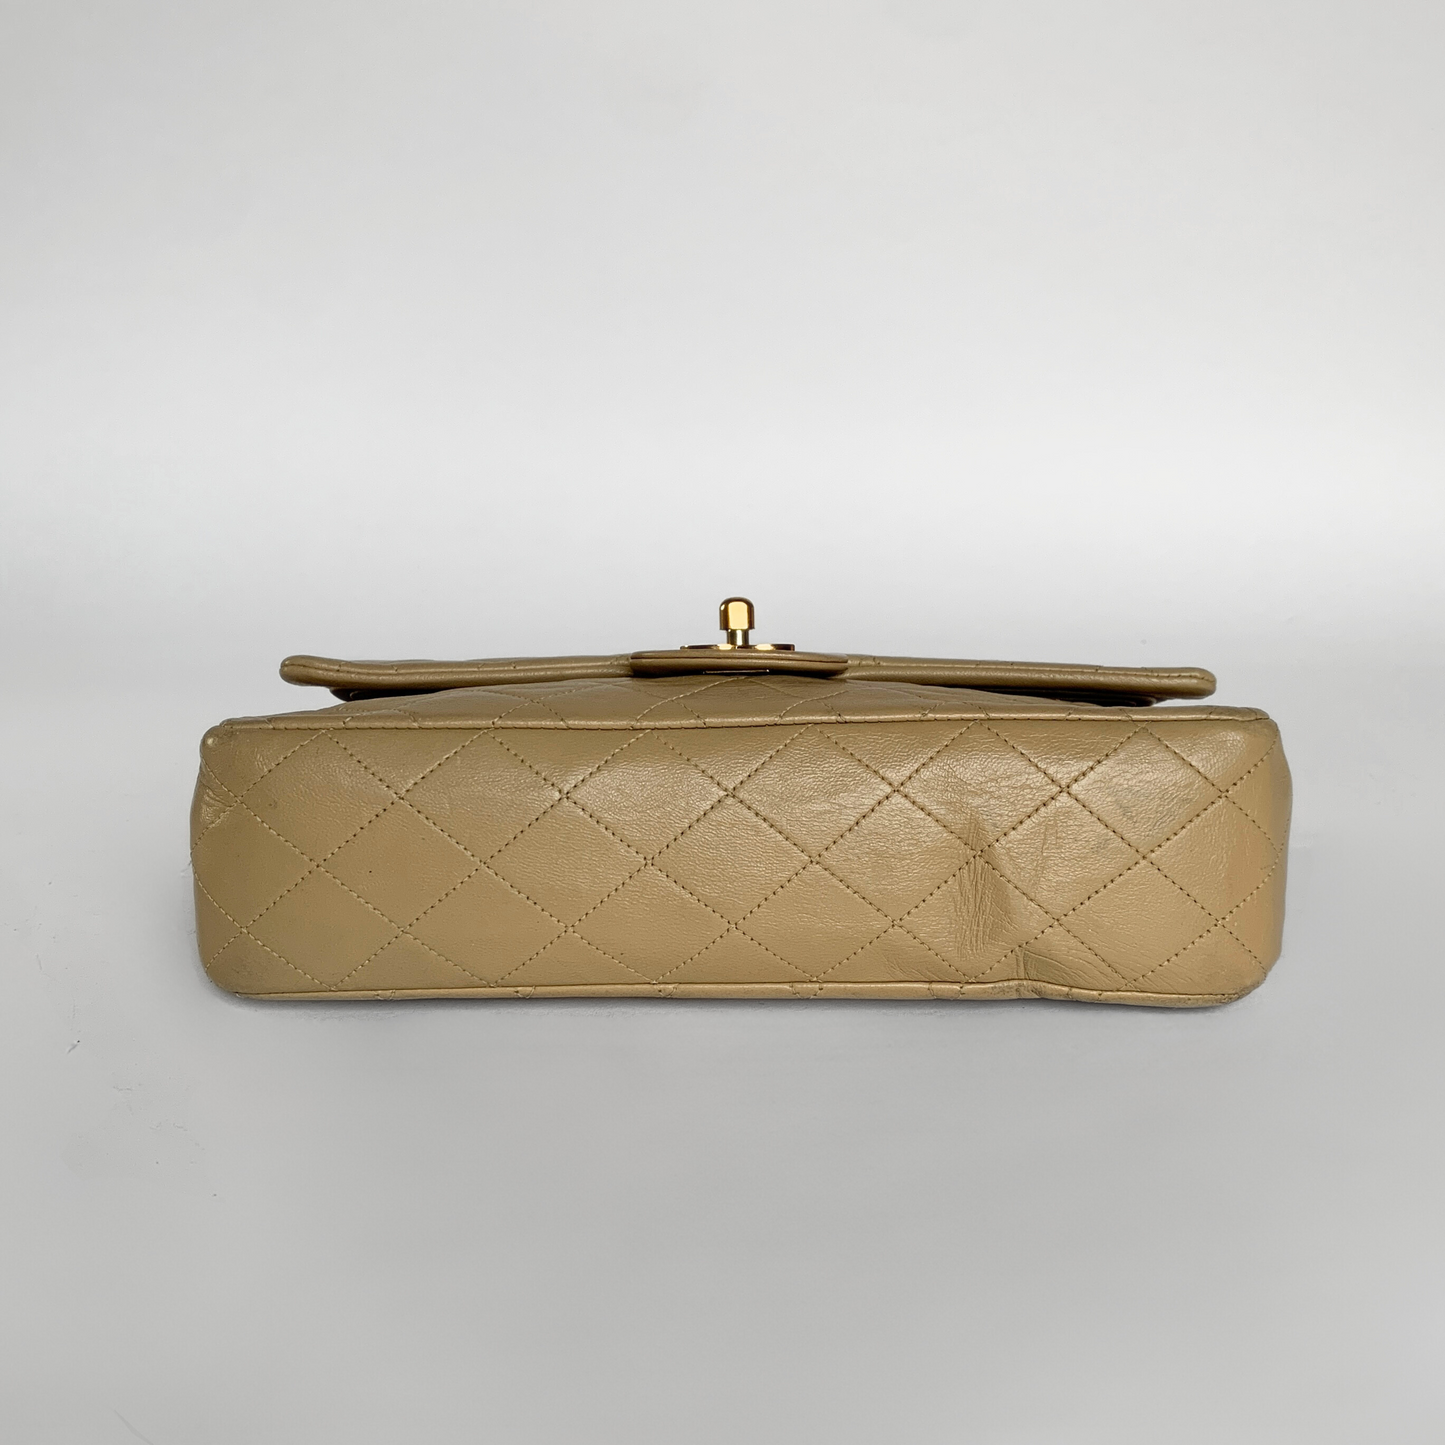 Chanel Classic Double Flap Bag Medium Lambskin Leather